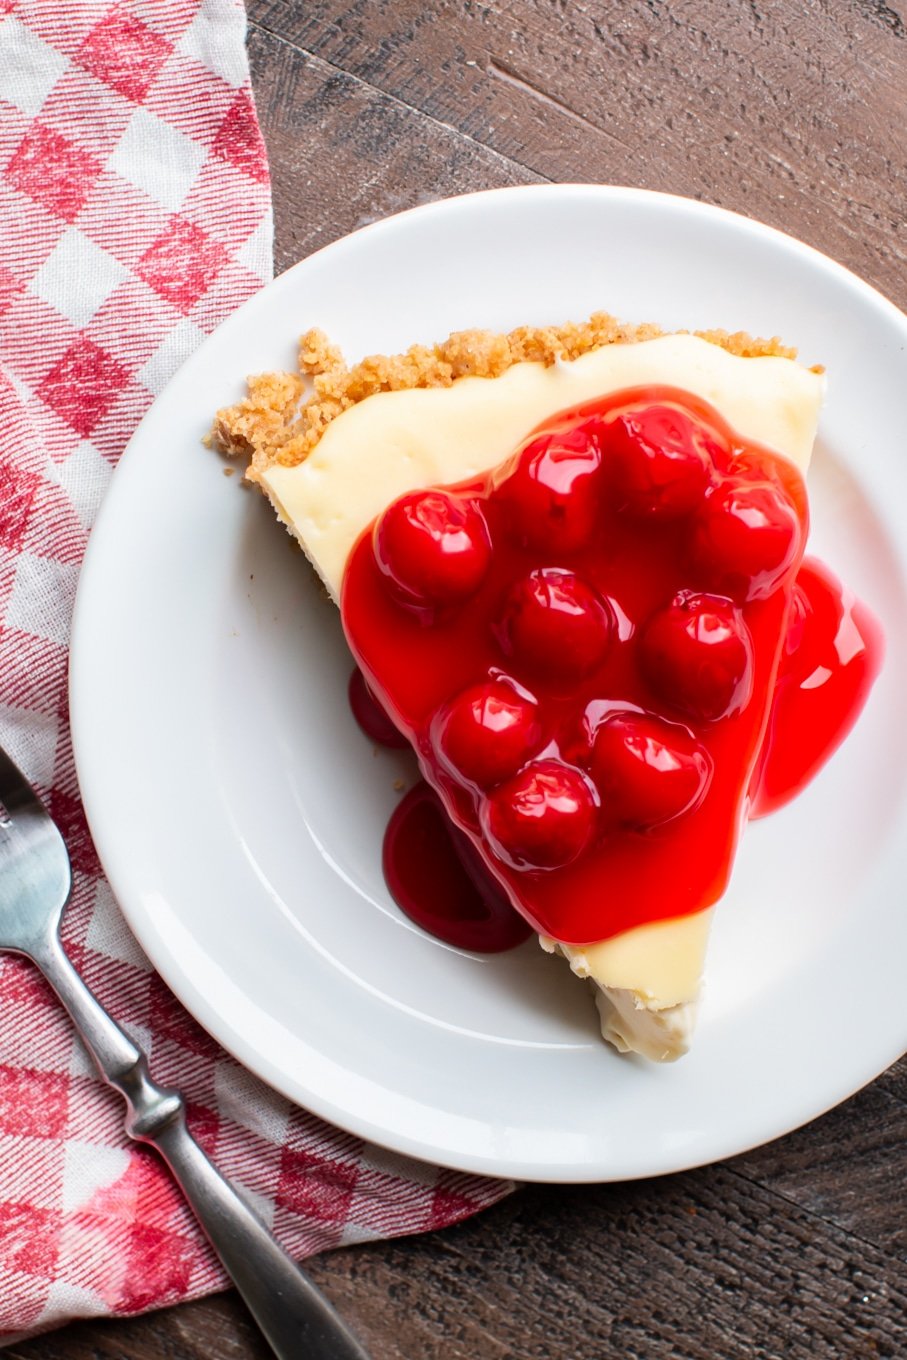 slice of cream cheese pie with cherries on top.